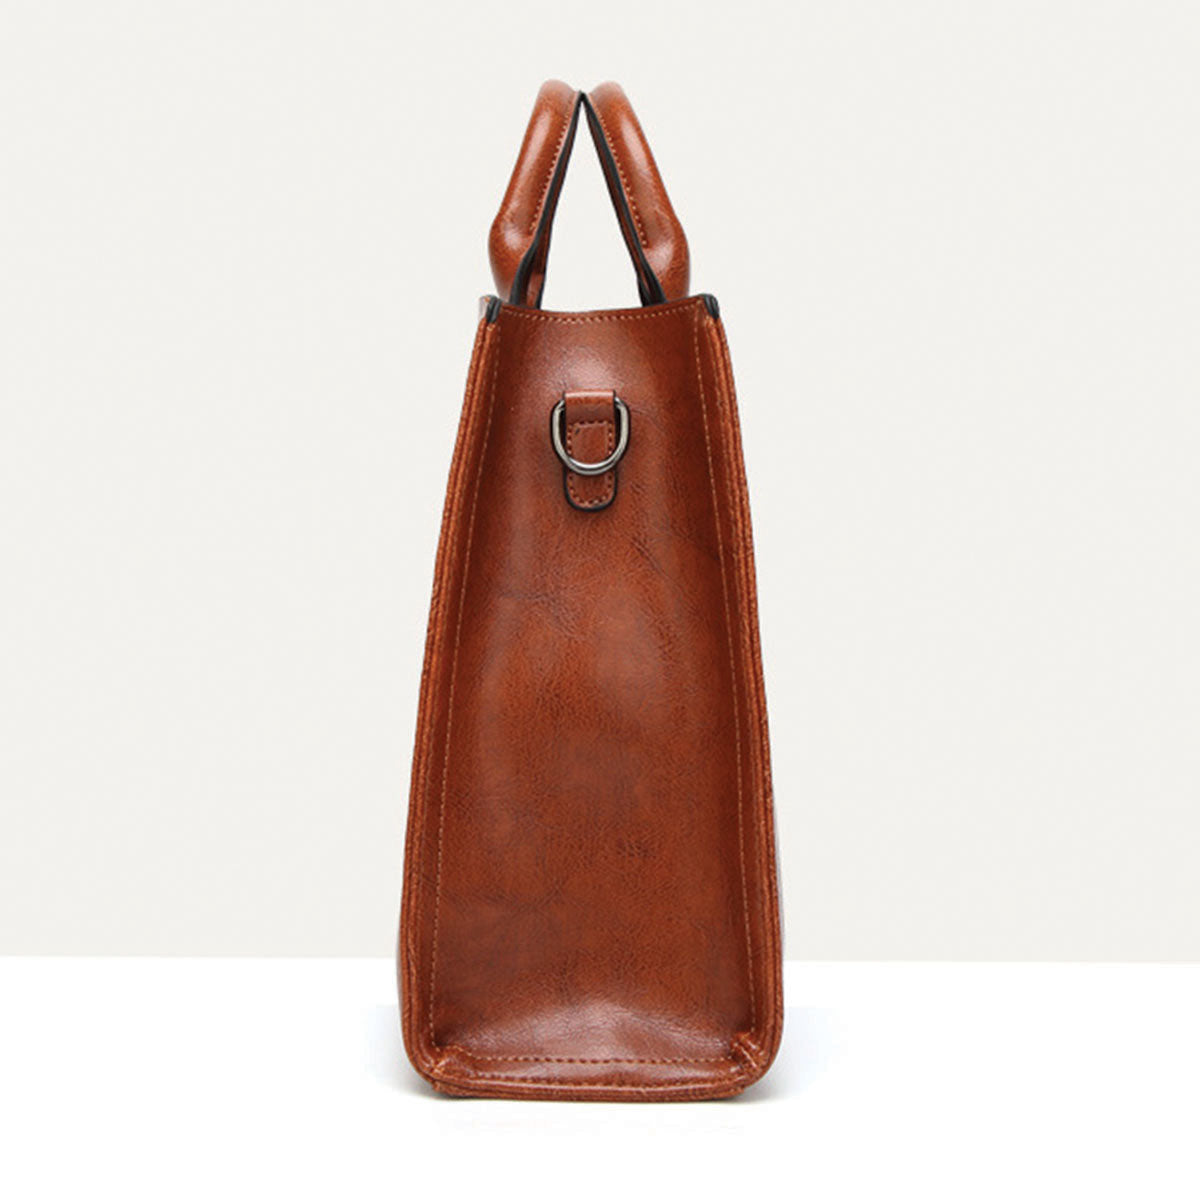 Your Best Companion - Miniature Pinscher Luxury Handbag V1